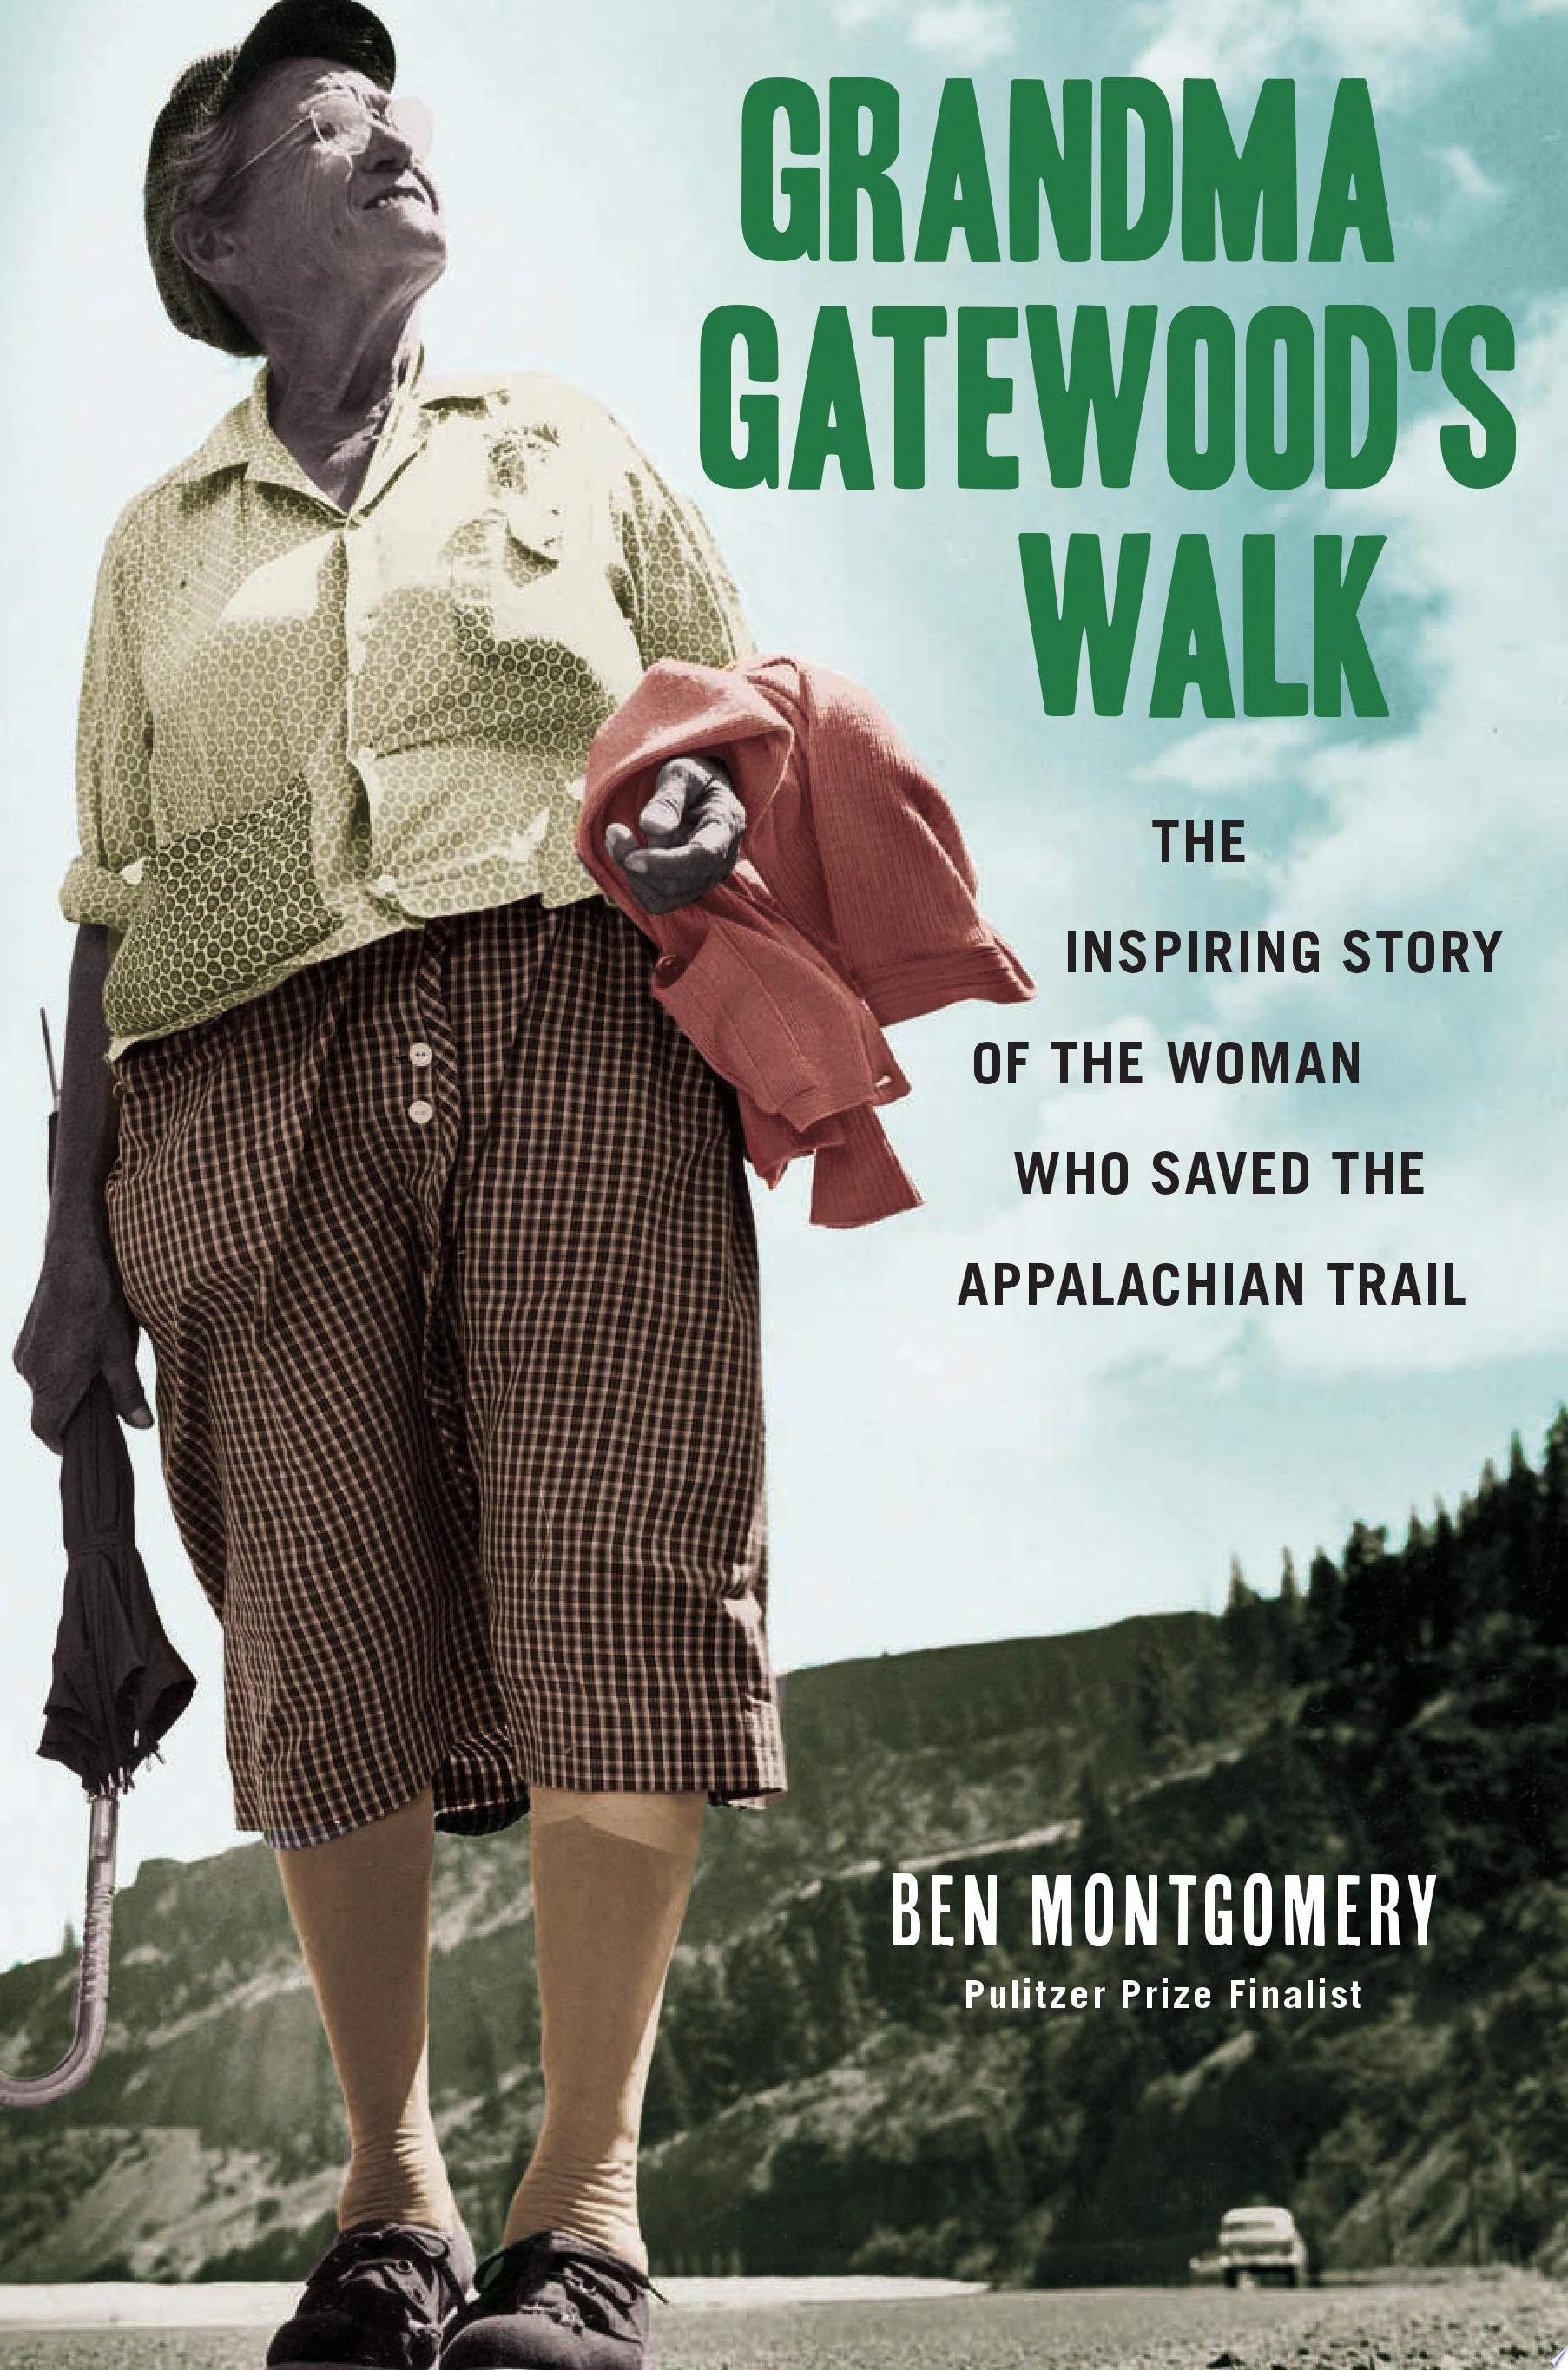 Image for "Grandma Gatewood's Walk"